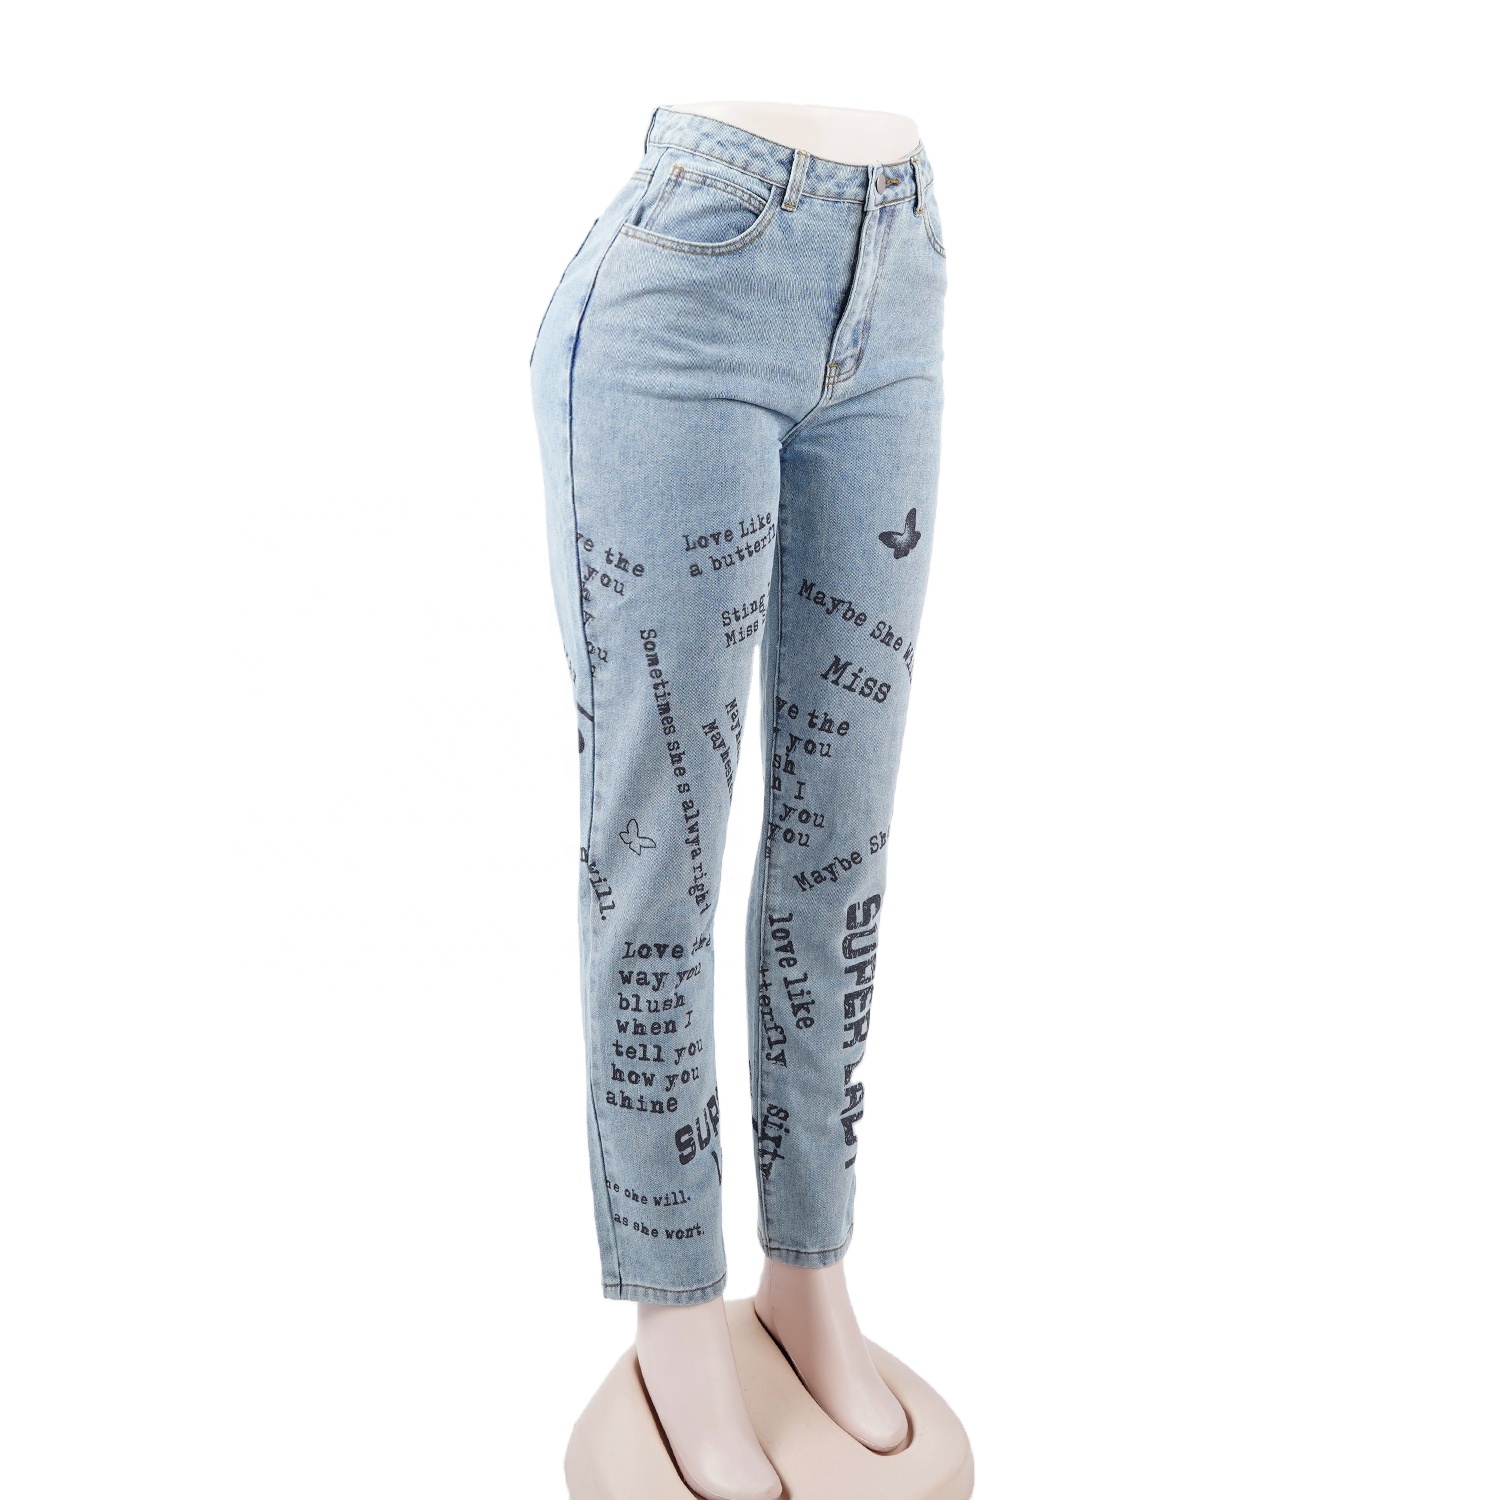 SKYKINGDOM newly design denim jeans regular style casual wear printed butterfly woman jeans